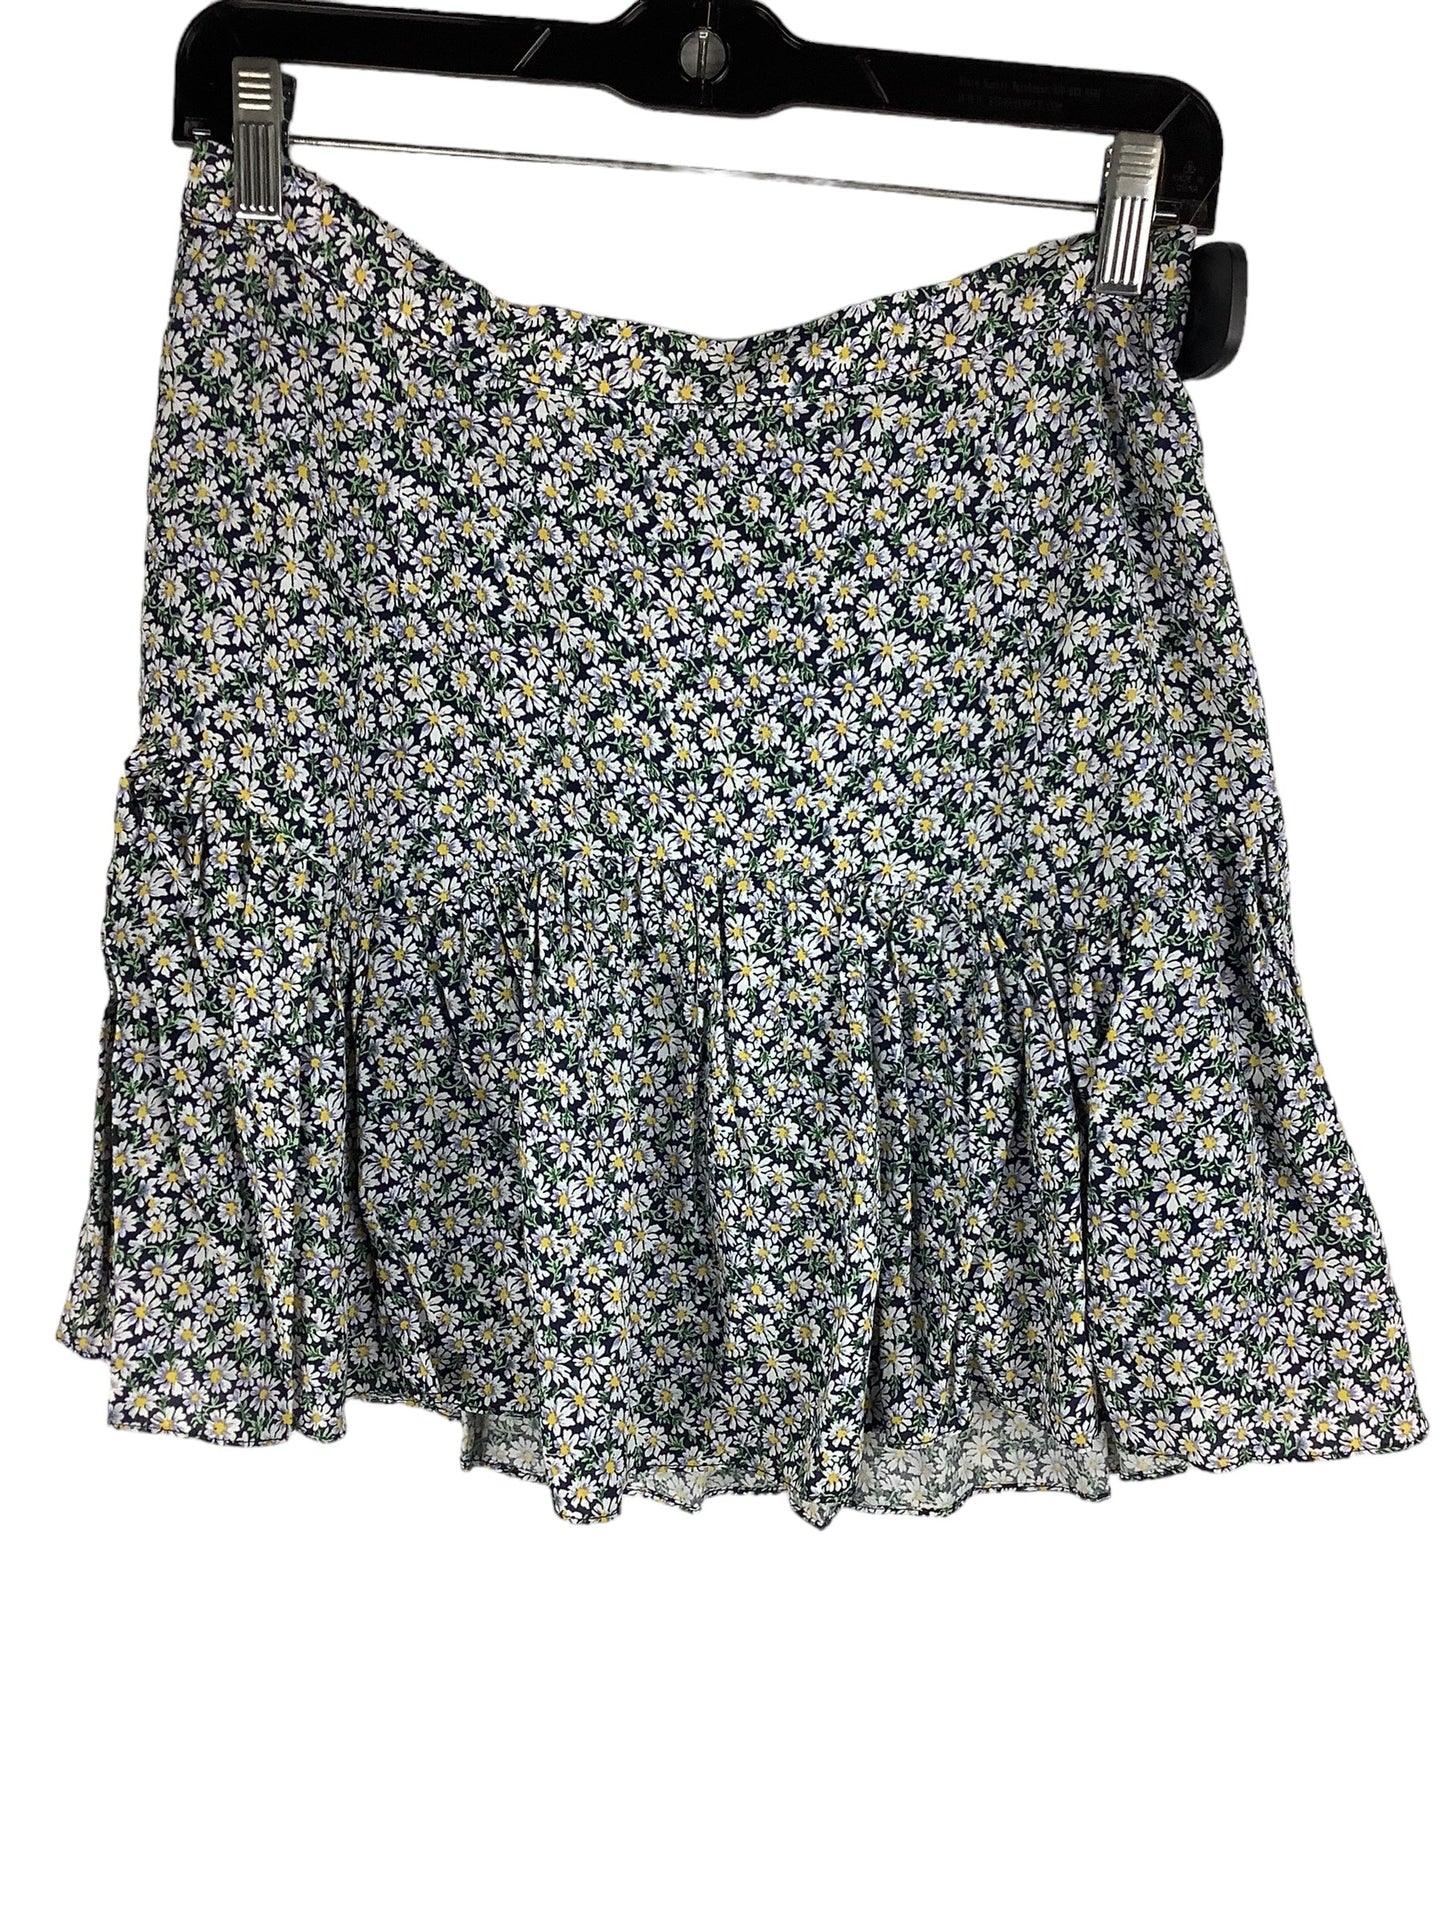 Floral Print Skirt Mini & Short Dress Forum, Size M